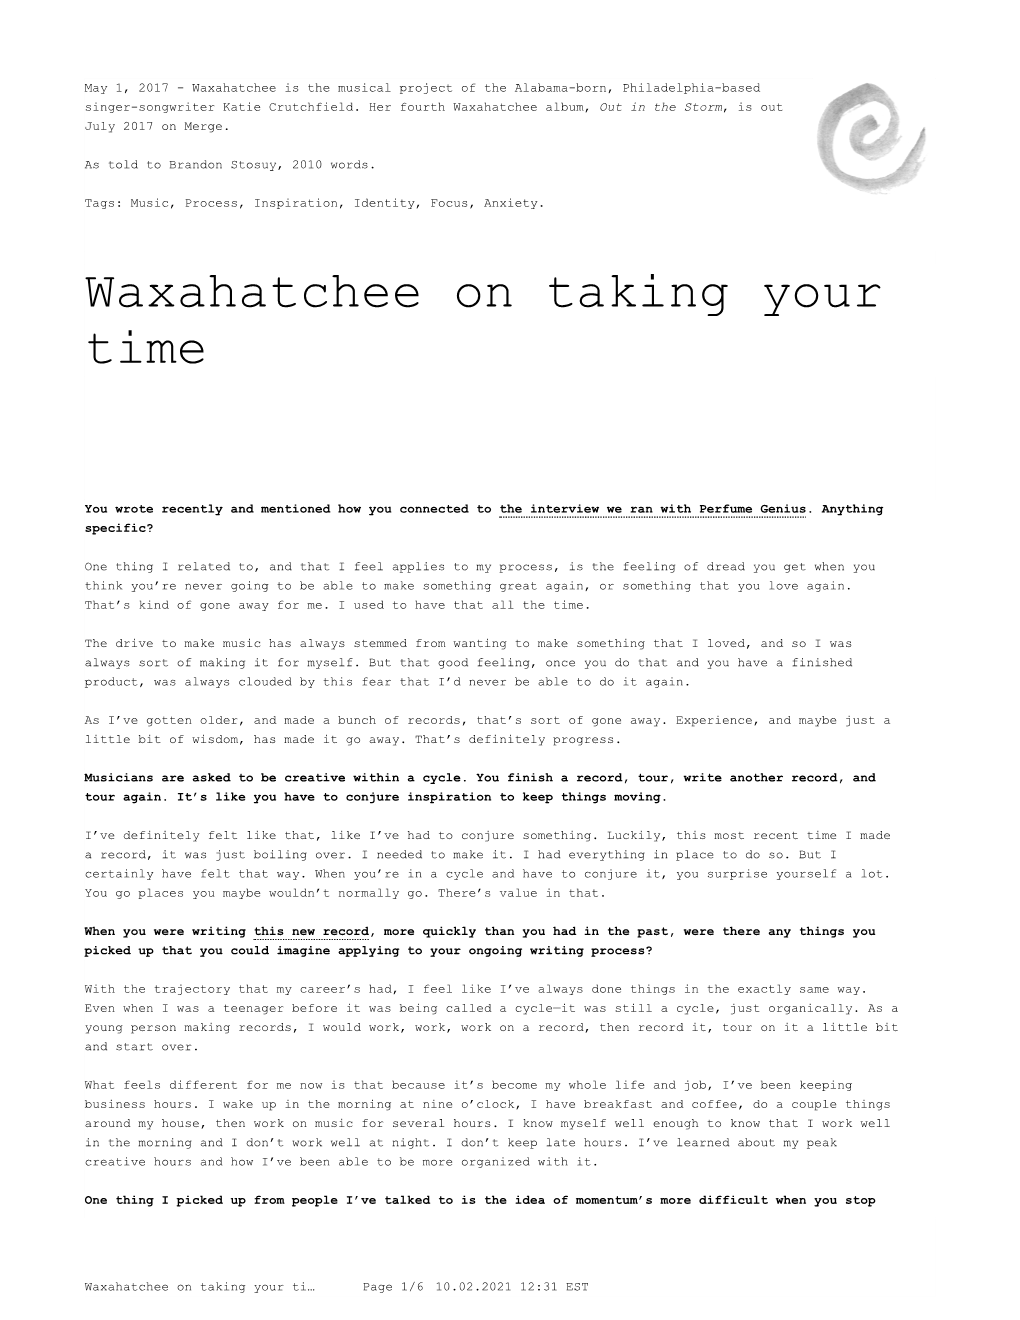 Waxahatchee on Taking Your Time